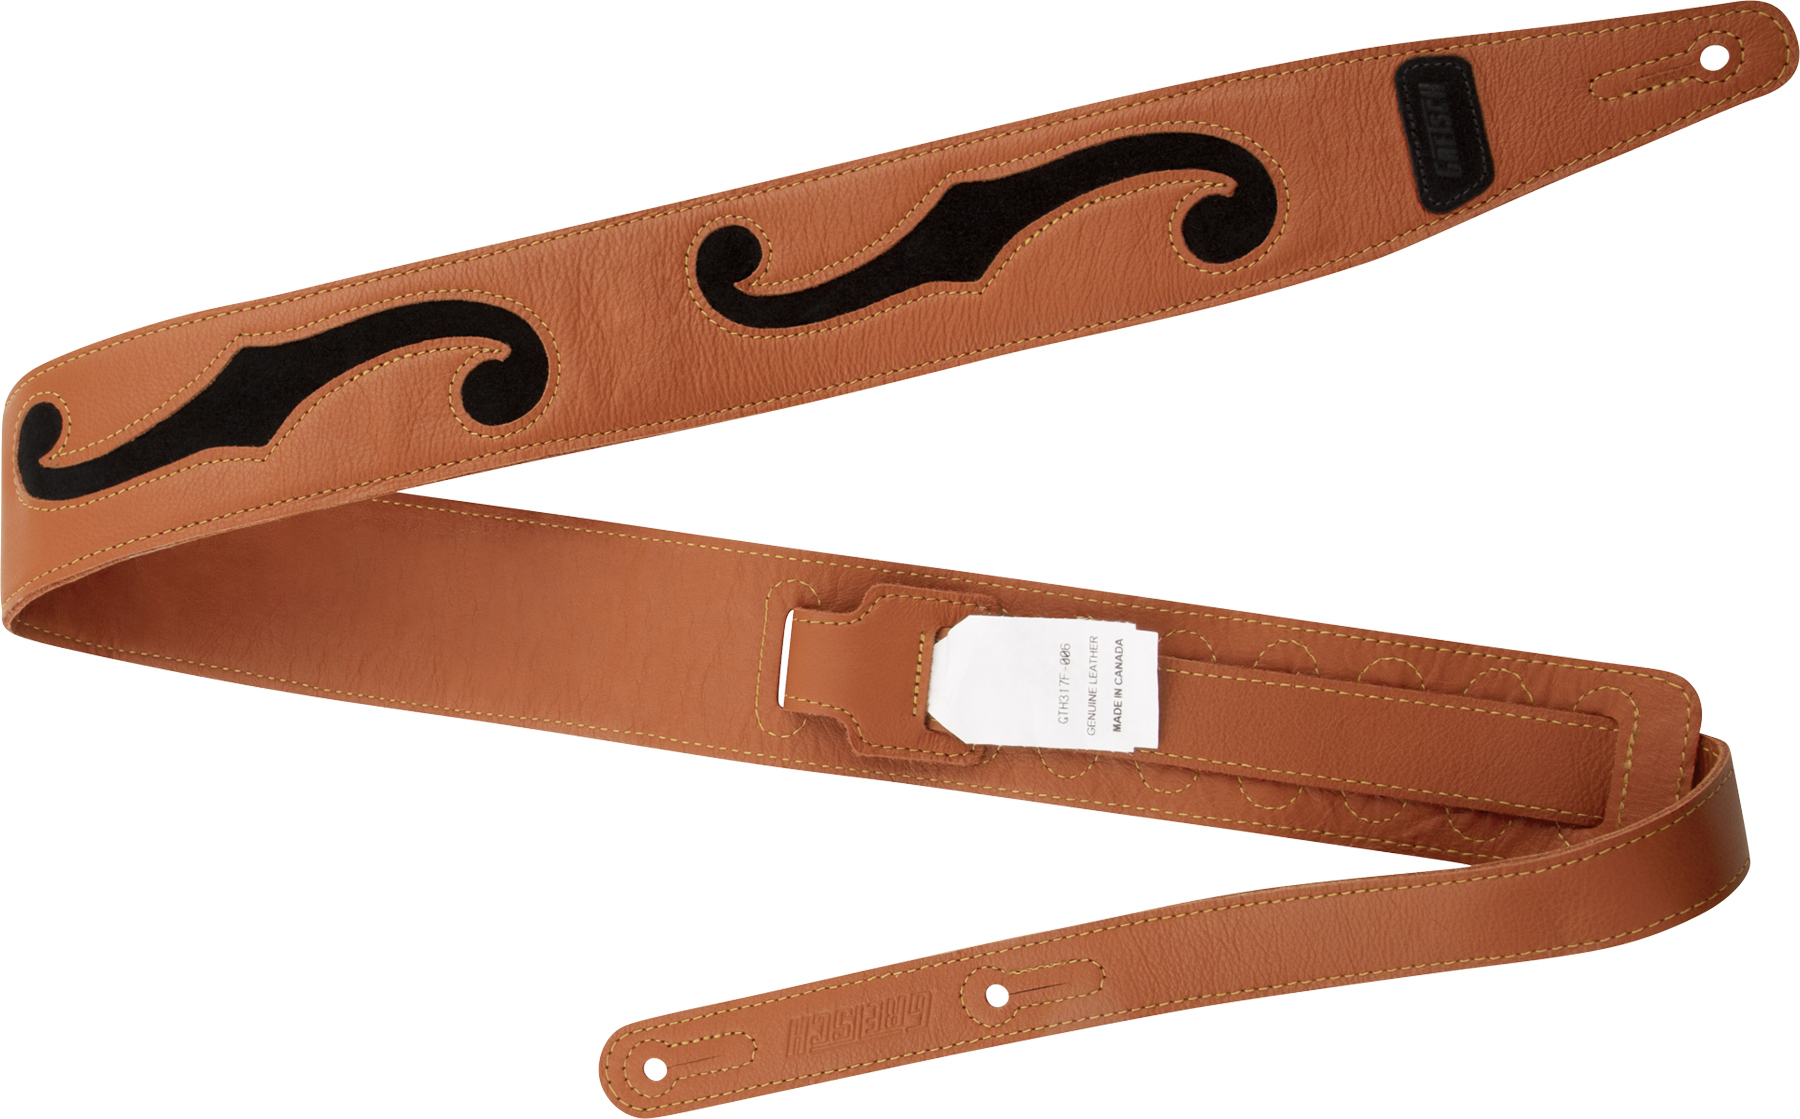 Gretsch F-holes Leather Guitar Strap 3-inch Cuir Orange & Black - Guitar strap - Main picture